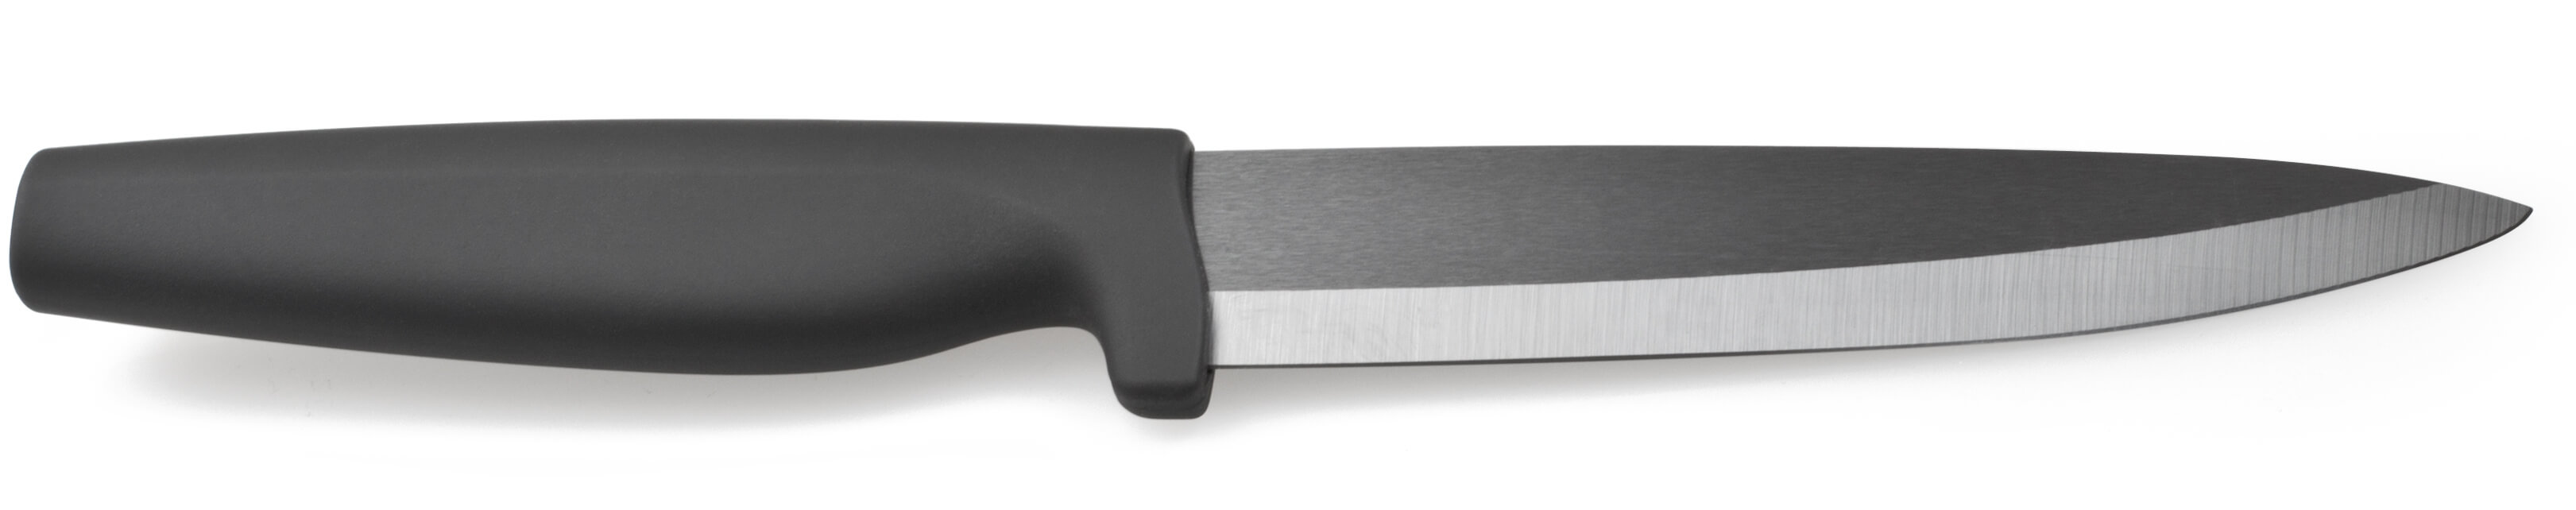 Ceramic knife large - 12,7cm